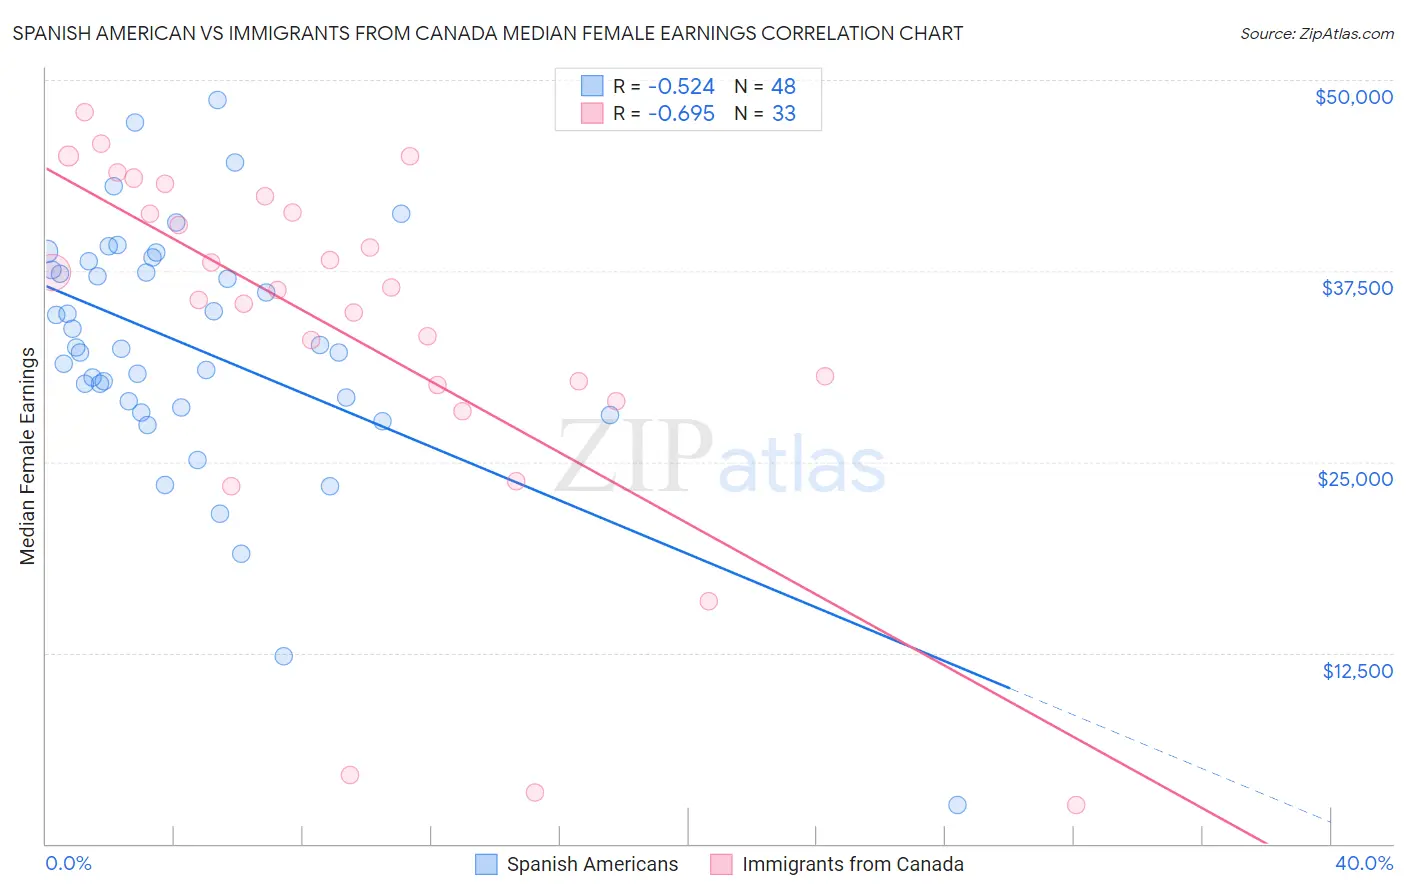 Spanish American vs Immigrants from Canada Median Female Earnings